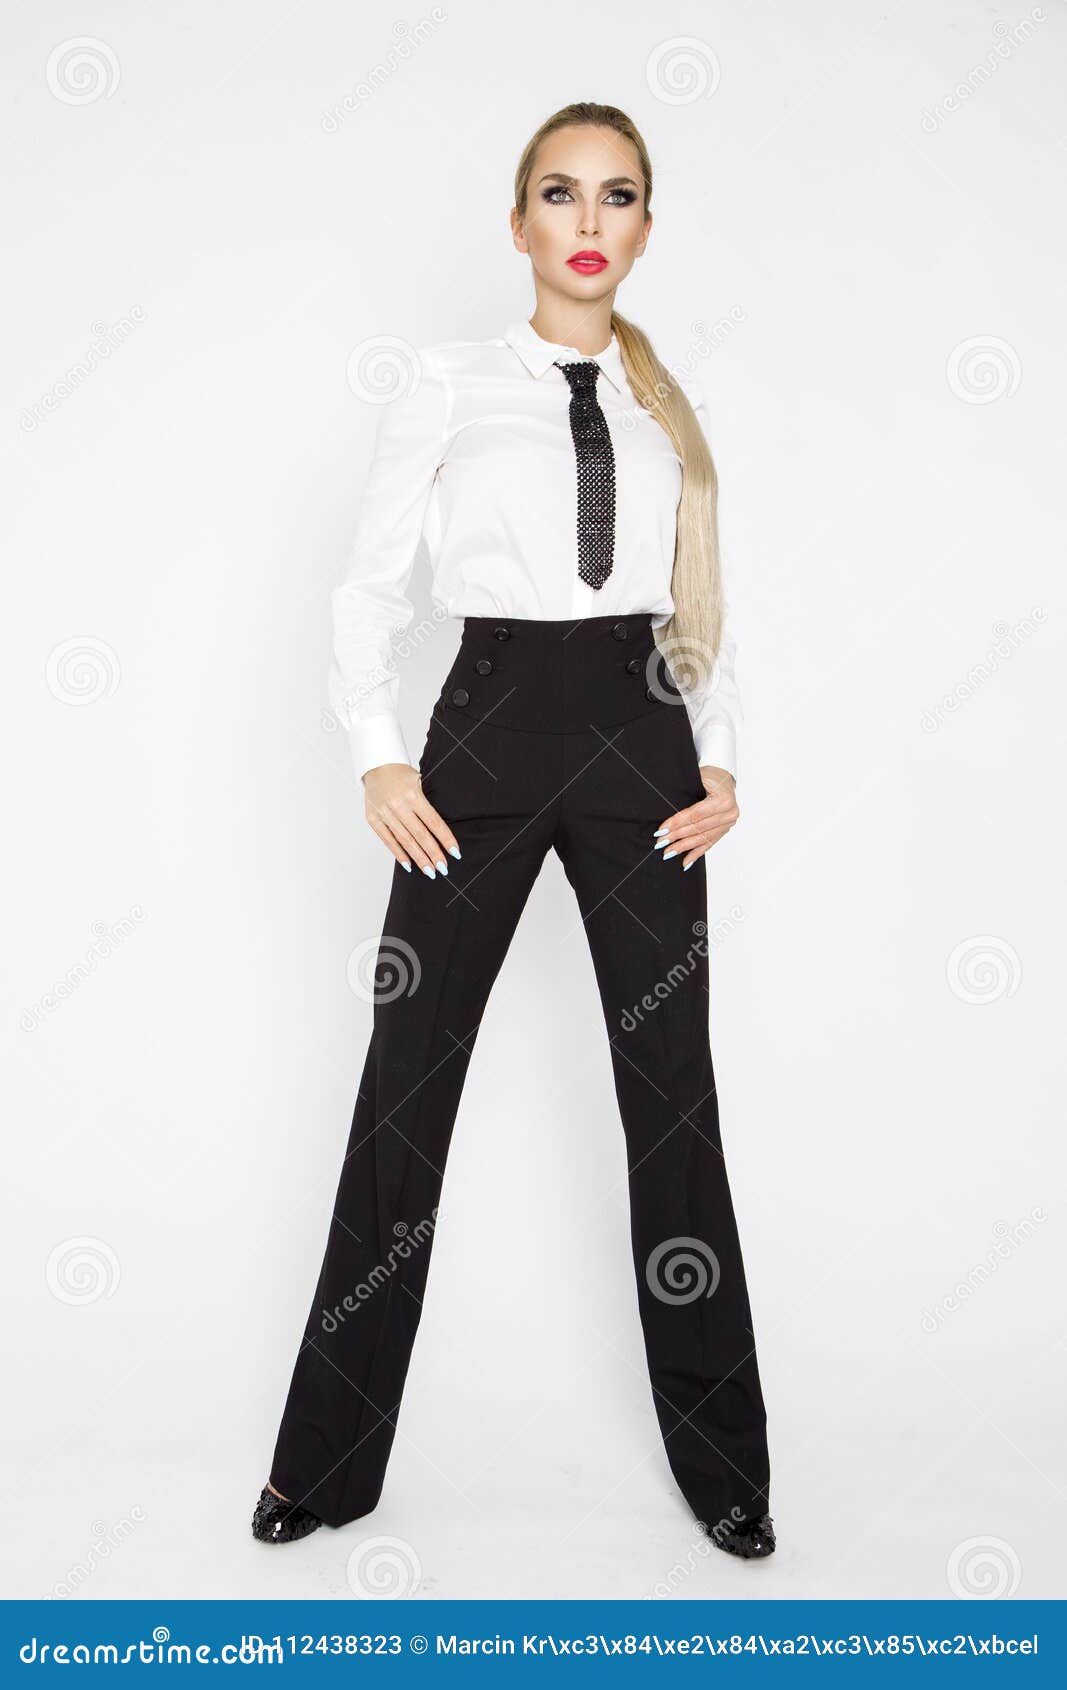 Dressing White Shirt Black Tie Gray Stock Photo 170300129 | Shutterstock